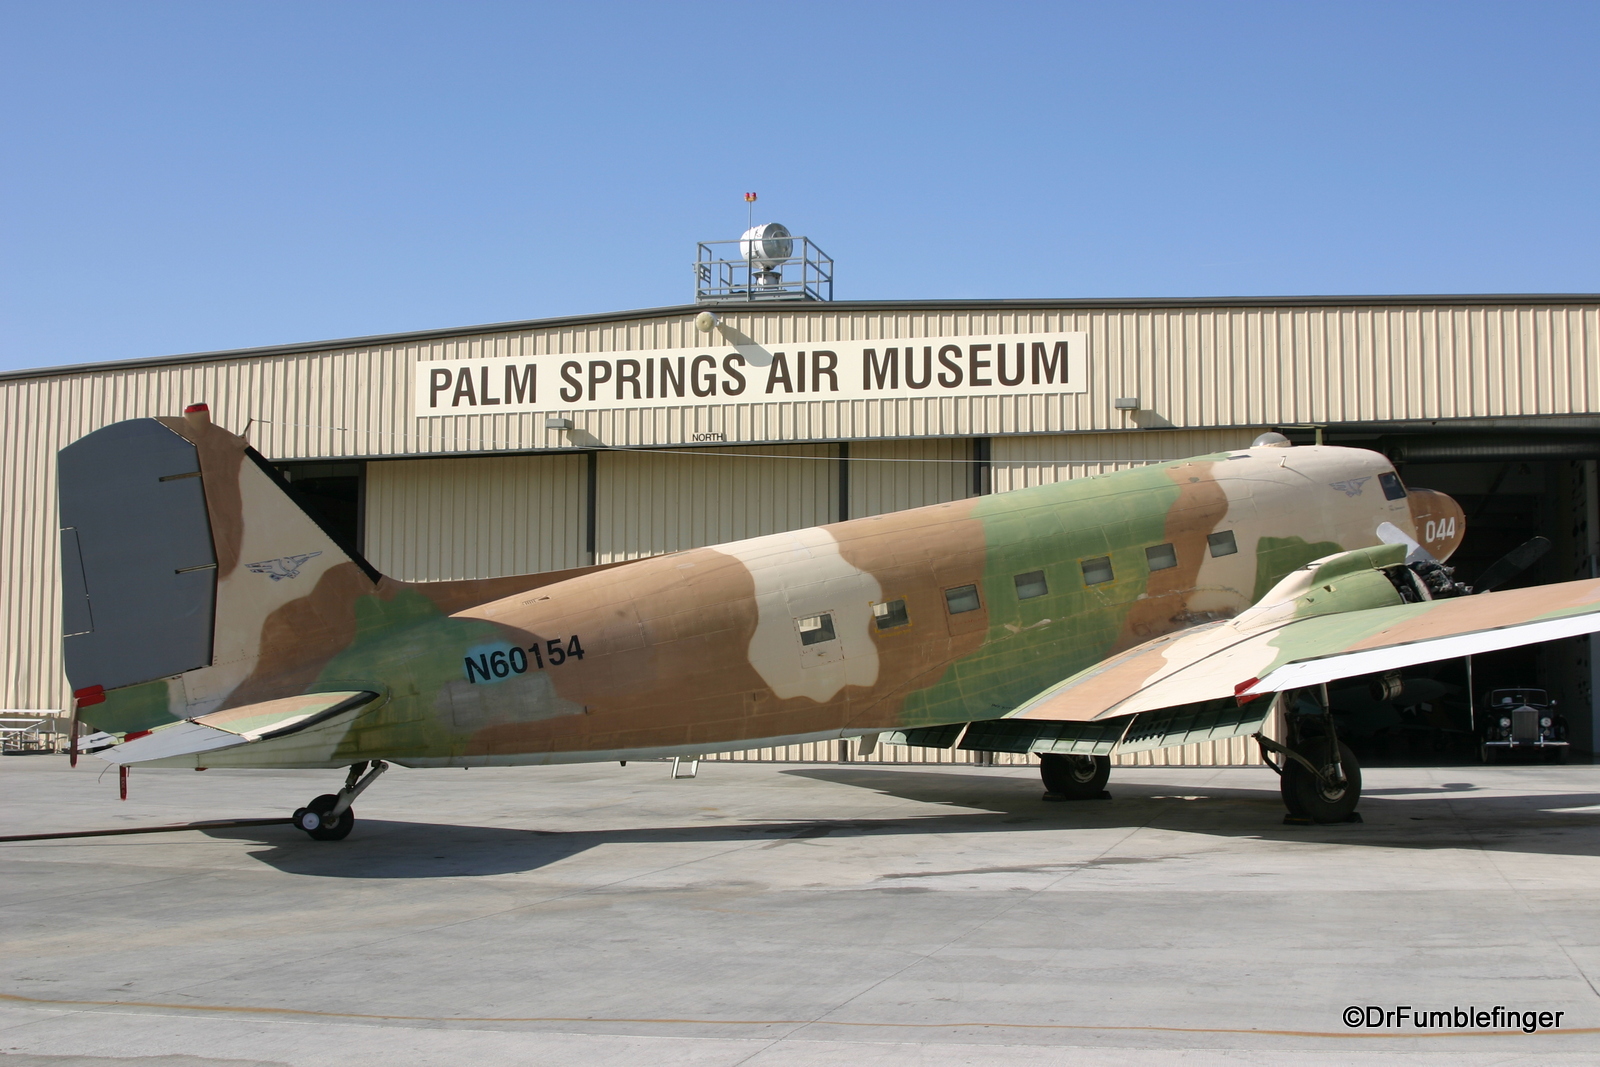 California, Spring 2009  107a.  Palm Springs Air Museum